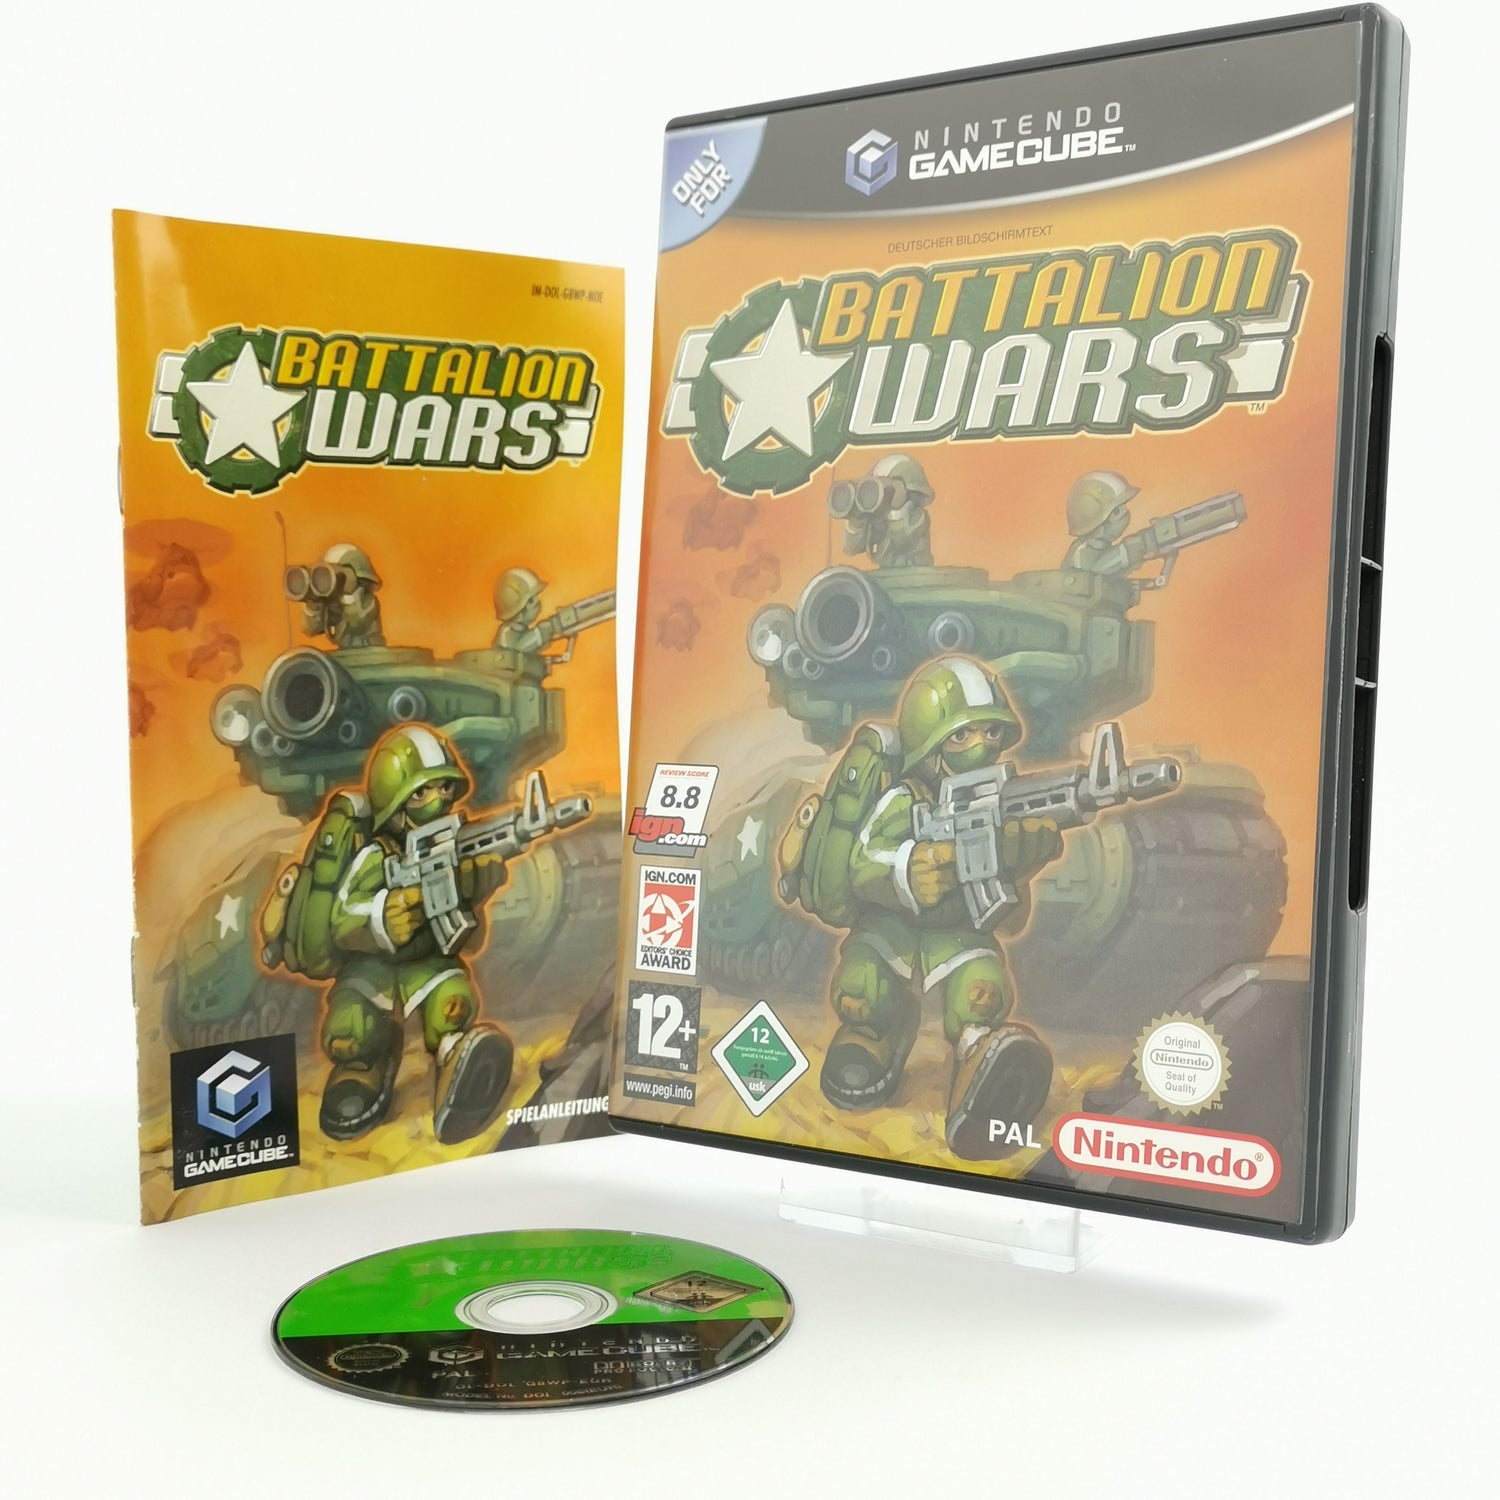 Nintendo Gamecube Game: Battalion Wars | German PAL version orig